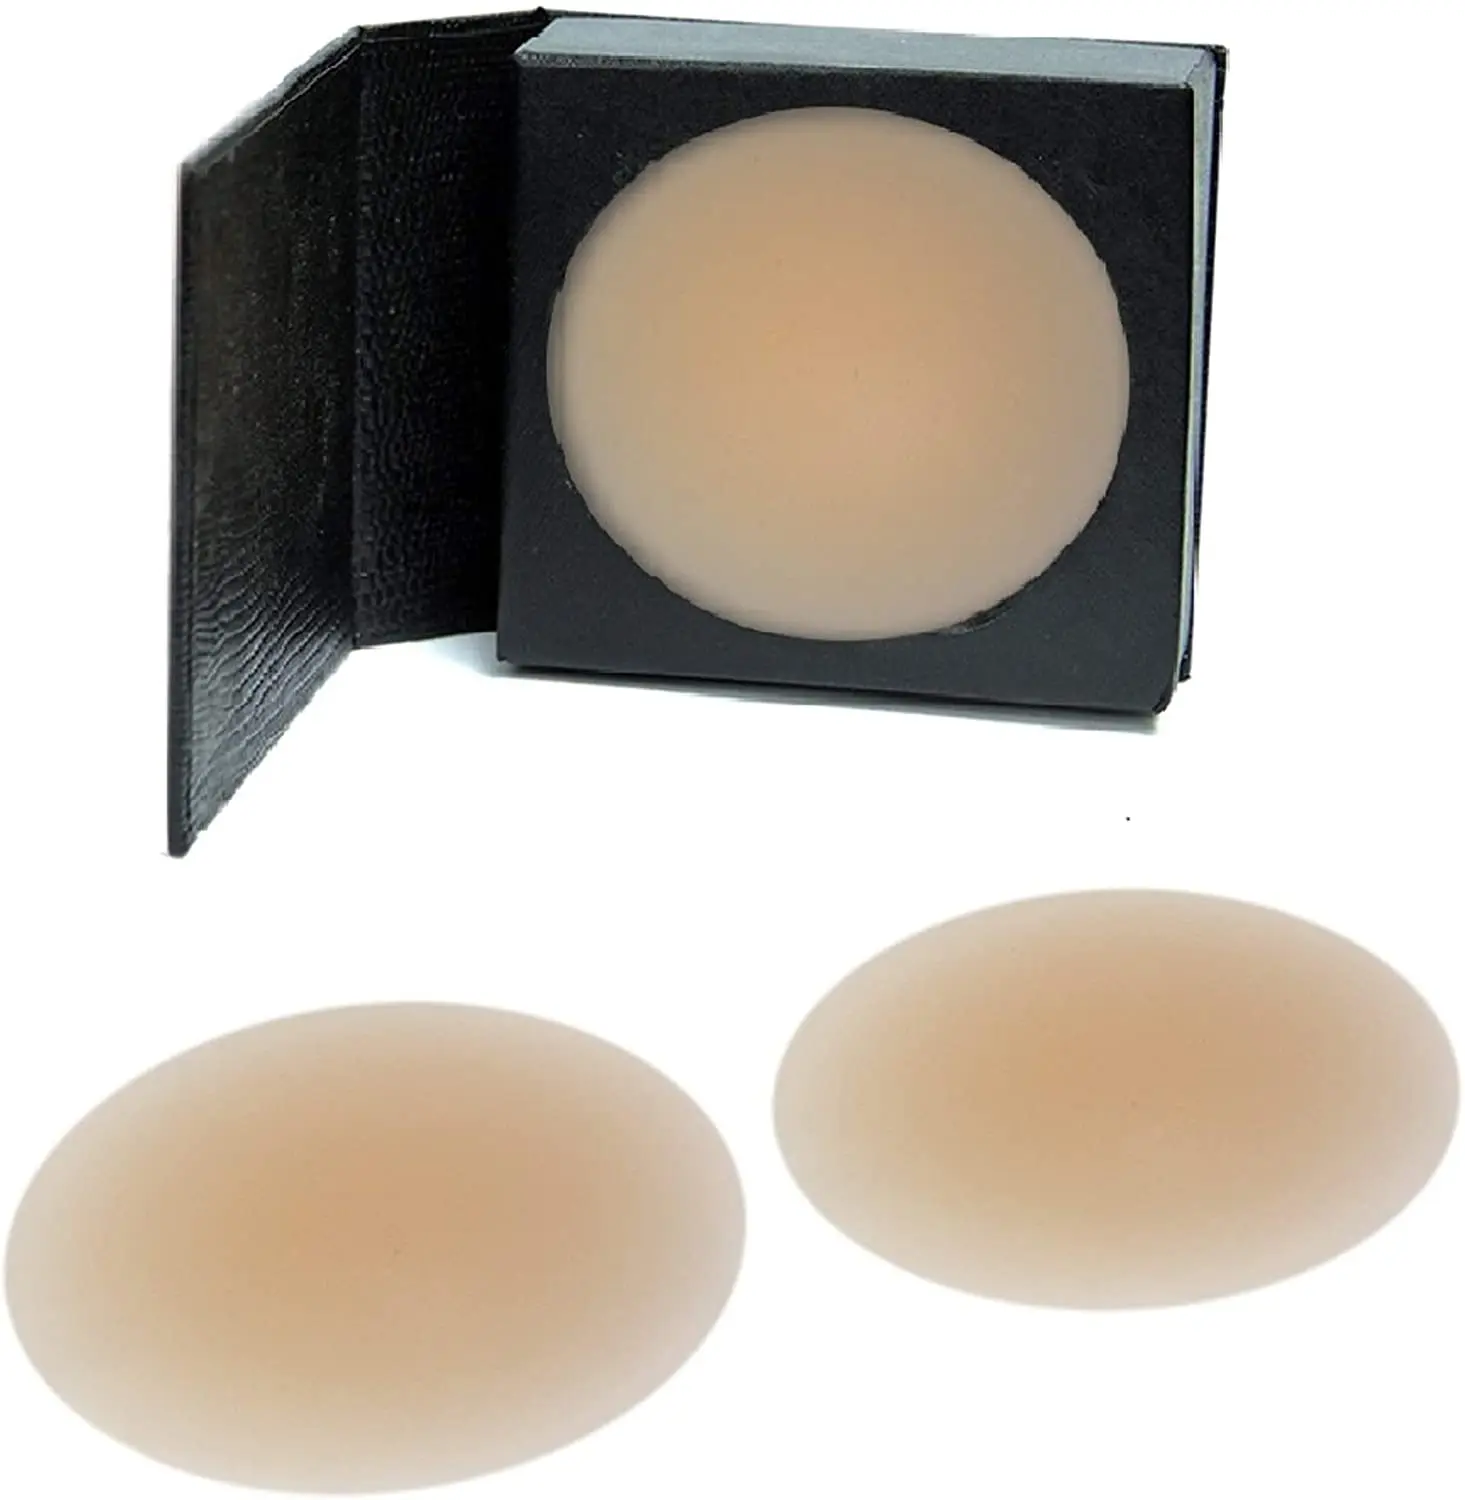 

New Design Adhesive or Non-adhesive Invisible Pure Silicone Nipple covers